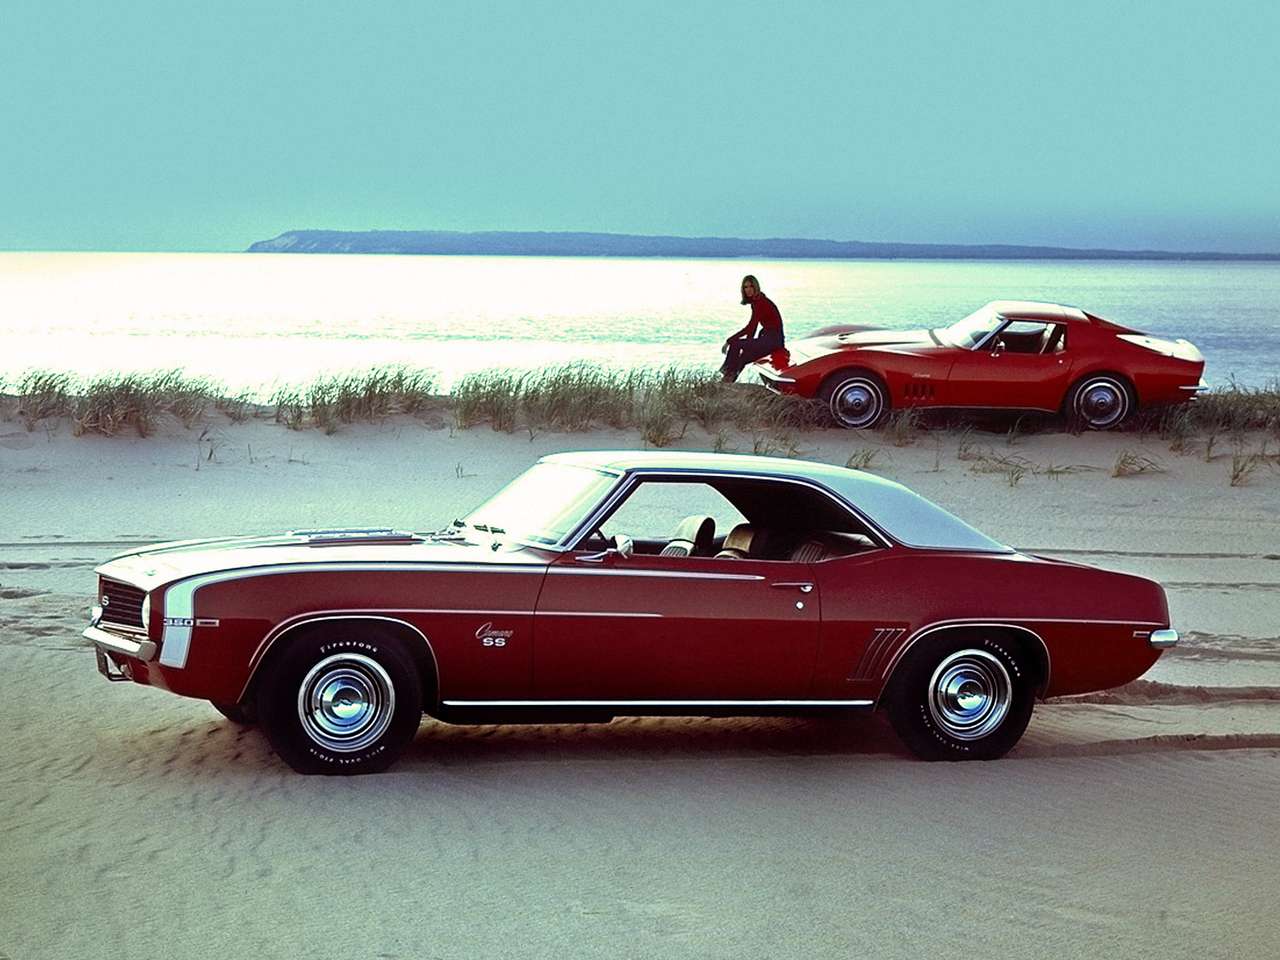 1969 Chevrolet Camaro SS en Corvette Sting Ray legpuzzel online